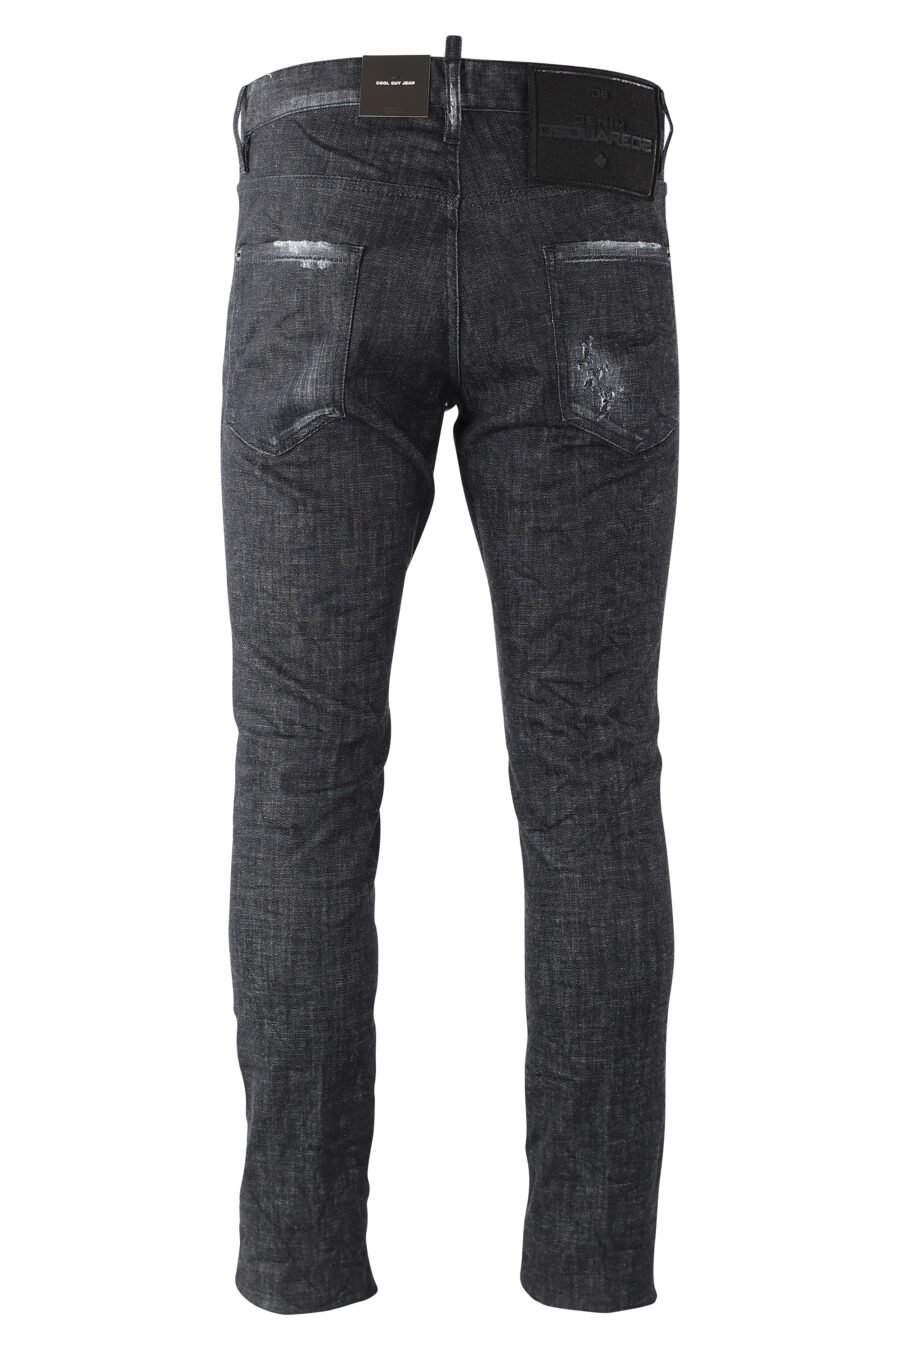 Cool guy jean trousers black semi-worn - IMG 9701